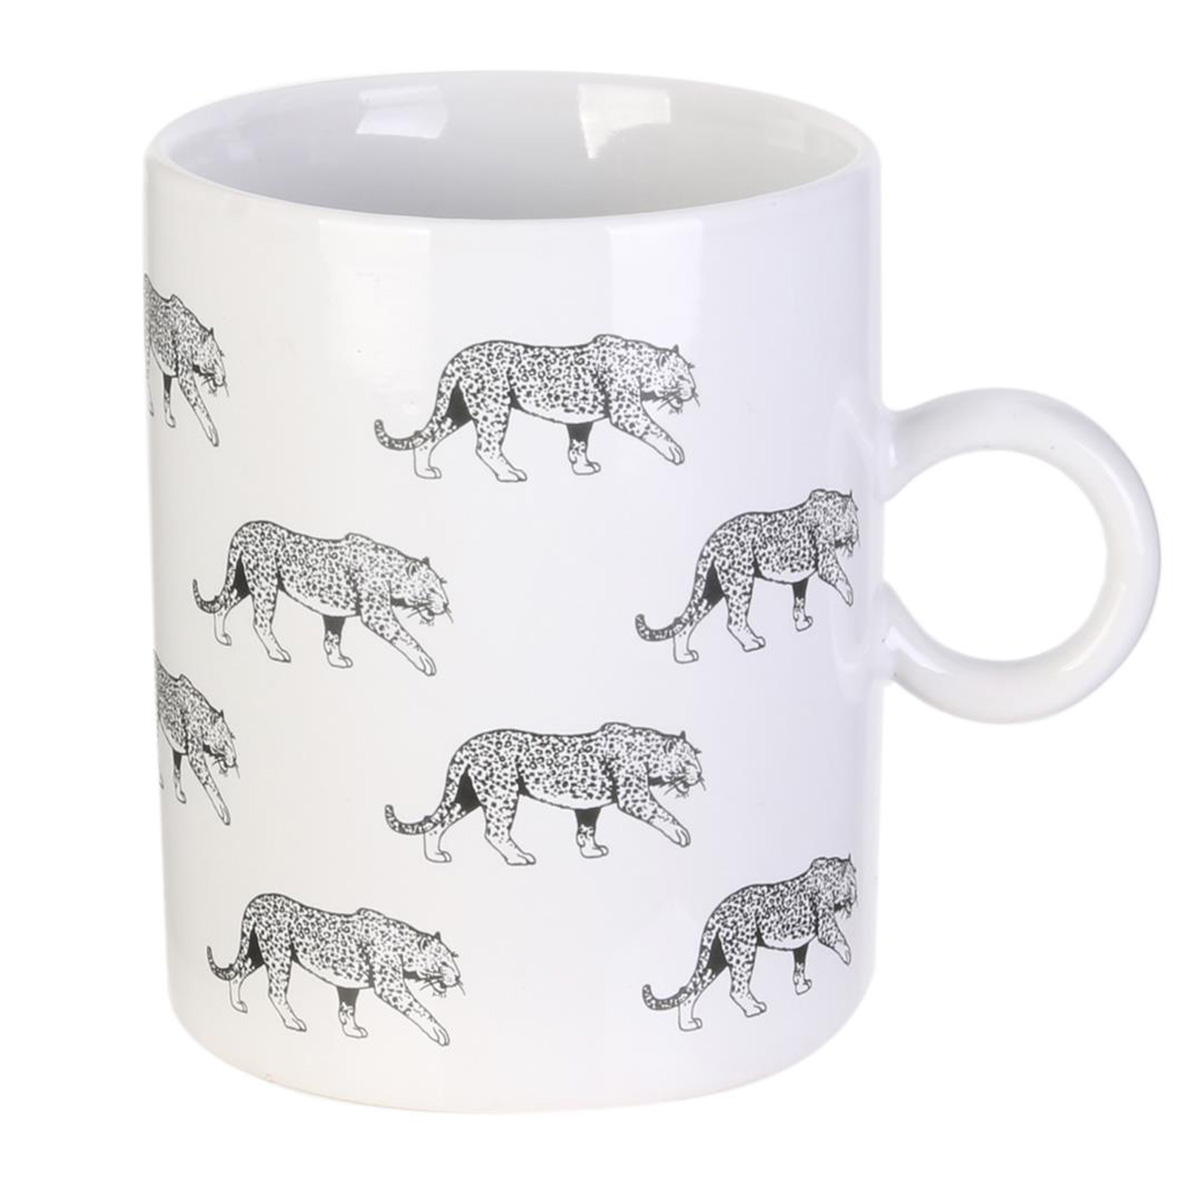 Grand mug céramique \'Jungle\' noir blanc (léopard) - 11x9 cm (40 cl)  - [A3667]